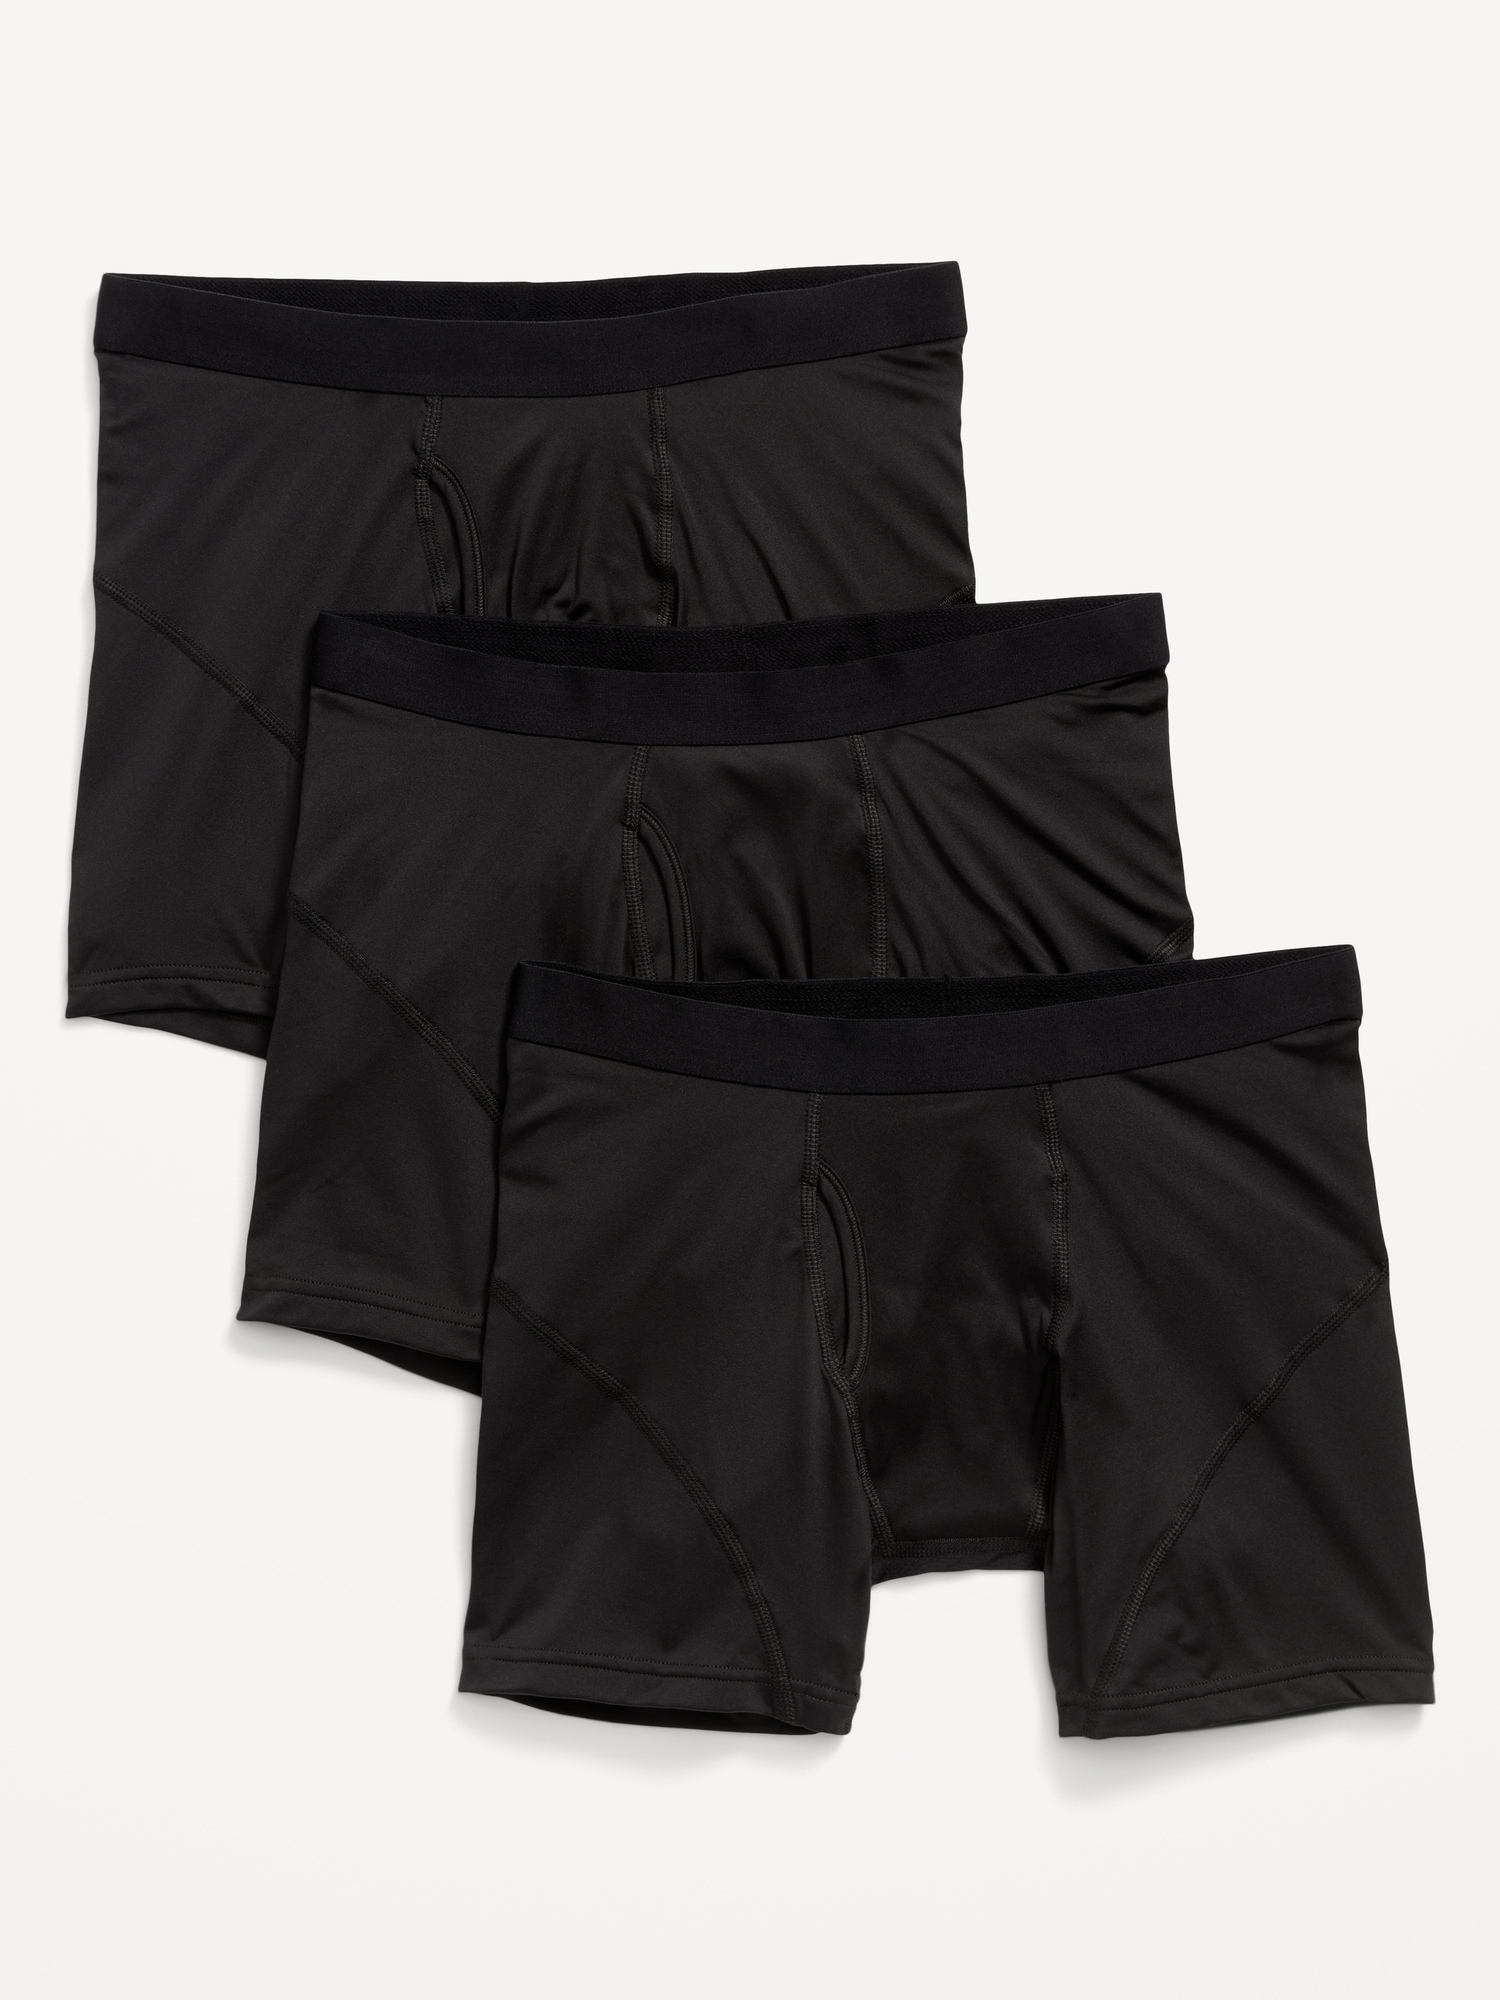 Old Navy Go-Dry Cool Performance Boxer-Briefs Underwear 3-Pack for Men -- 5-inch inseam black. 1